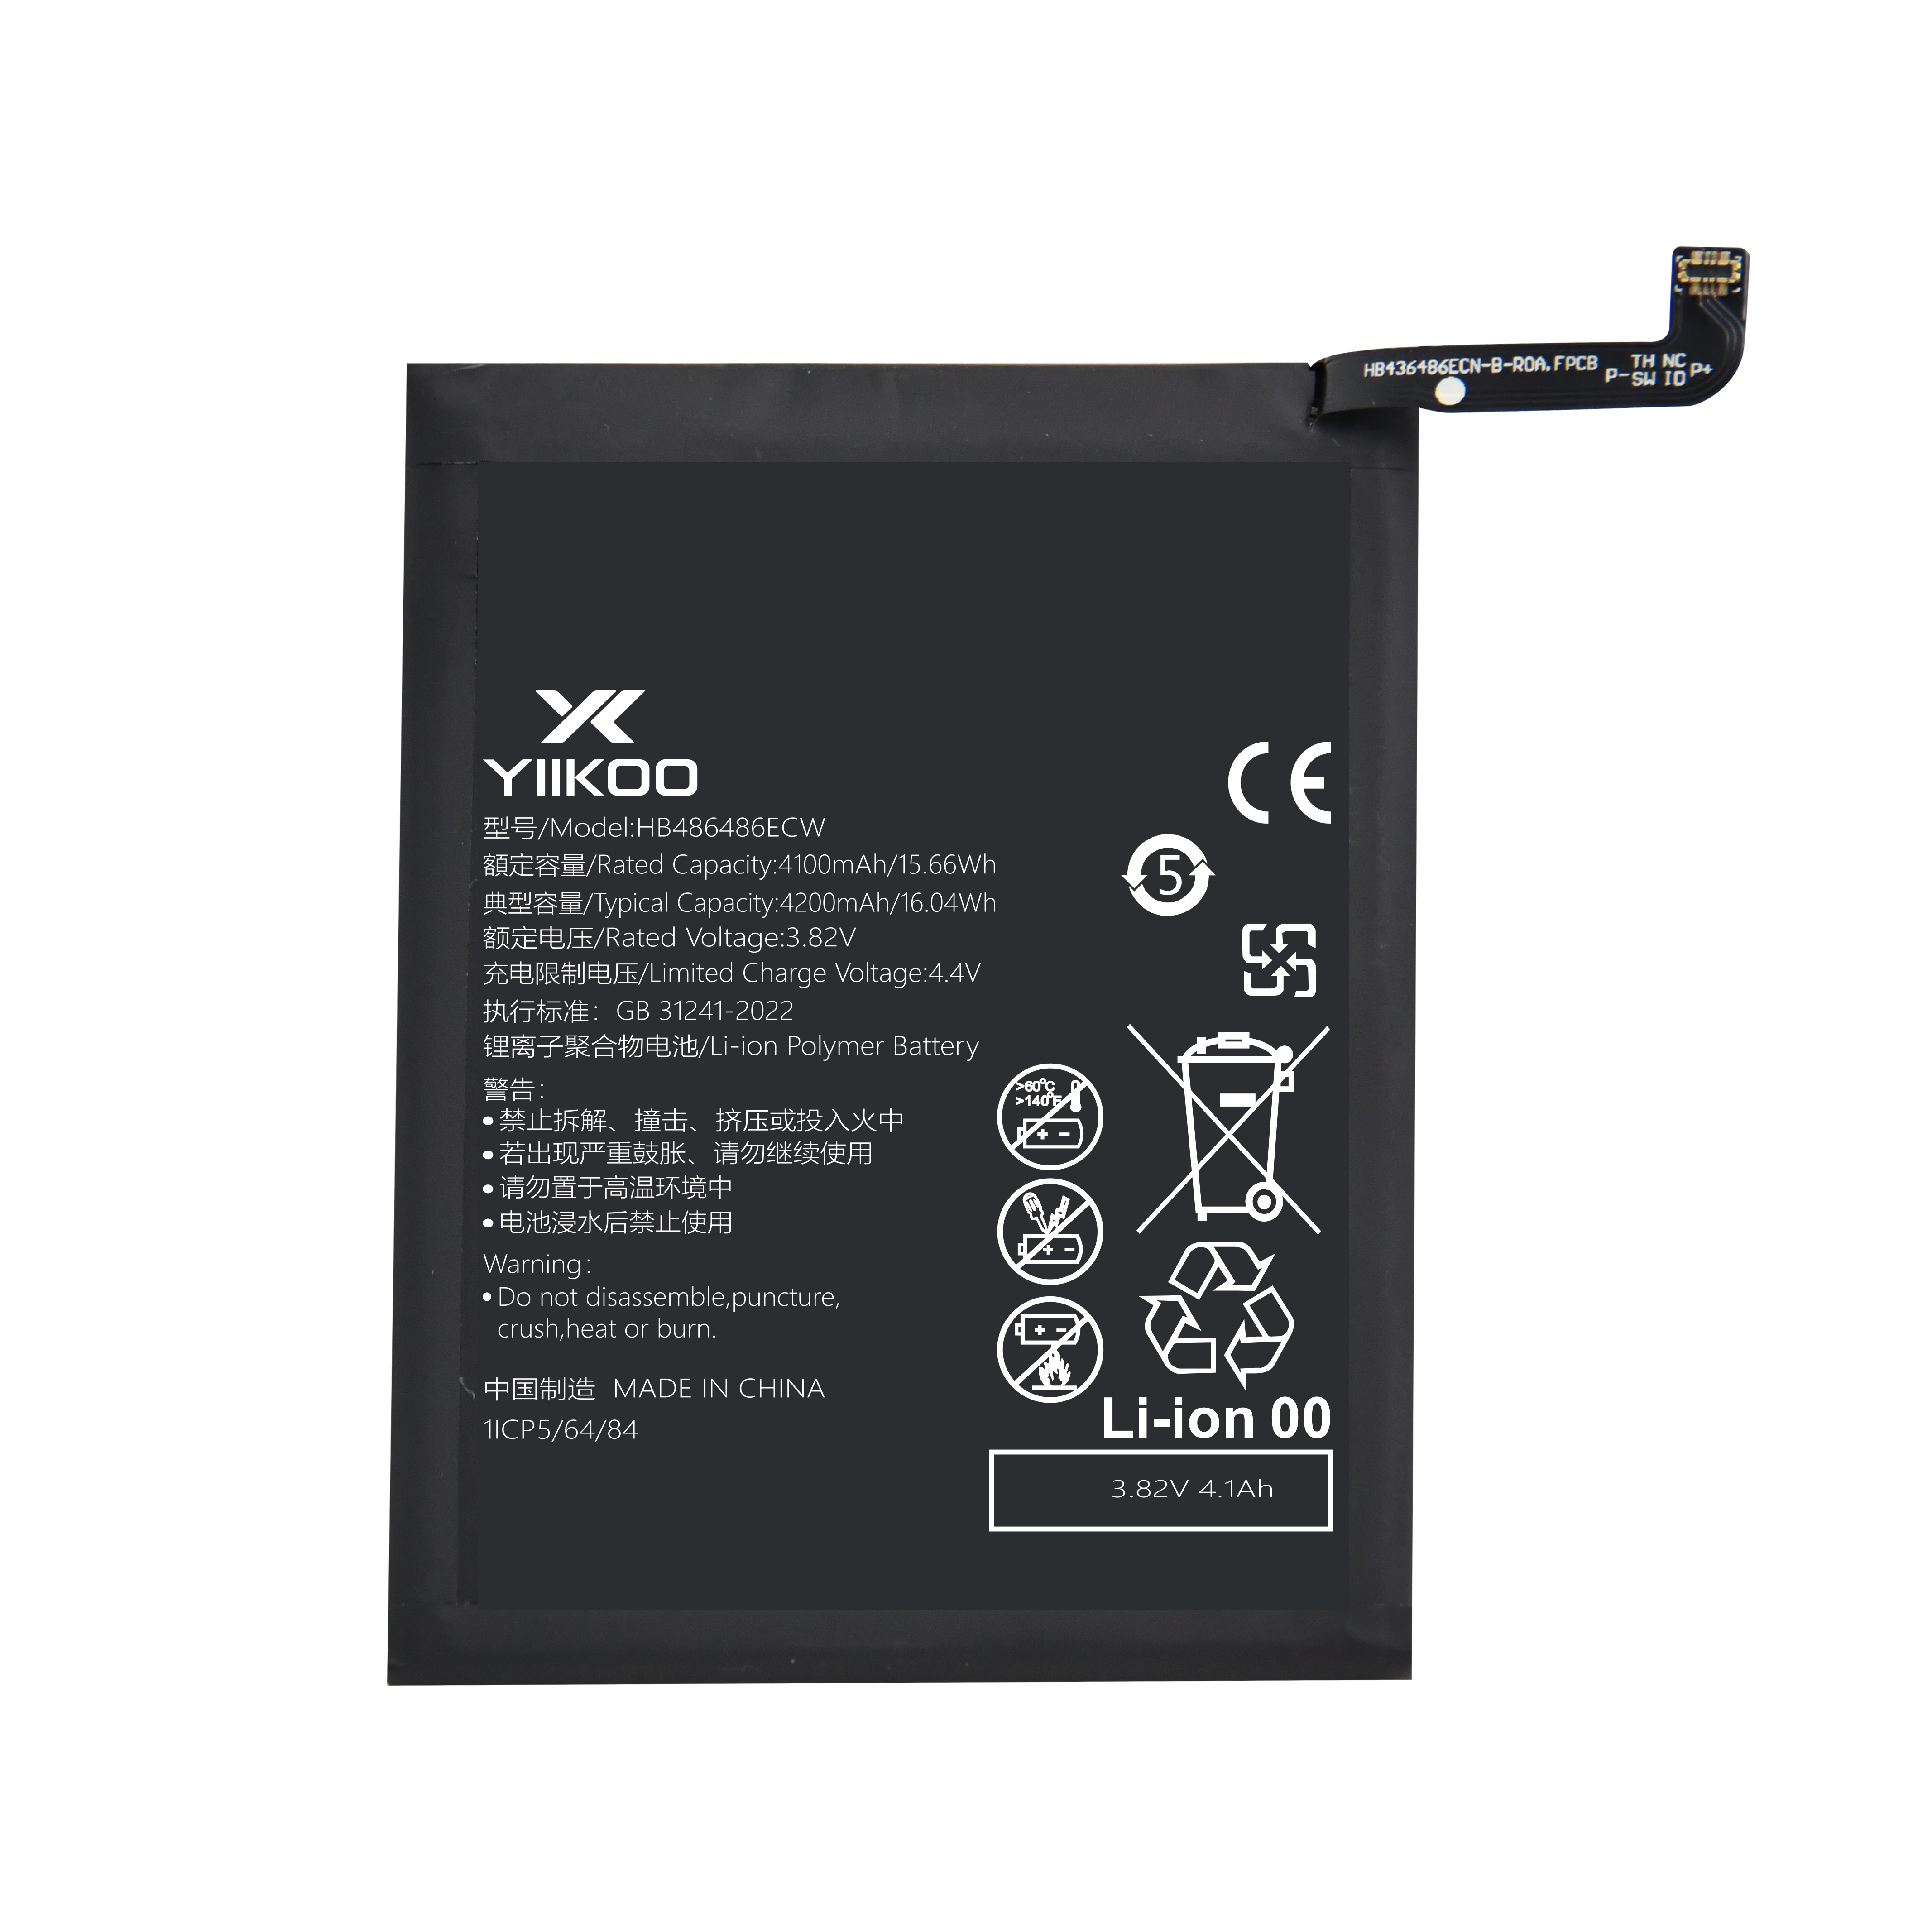 Huawei P30 pro/mate20pro/Mate20X 5G Batterie (4100mAh) HB486486ECW